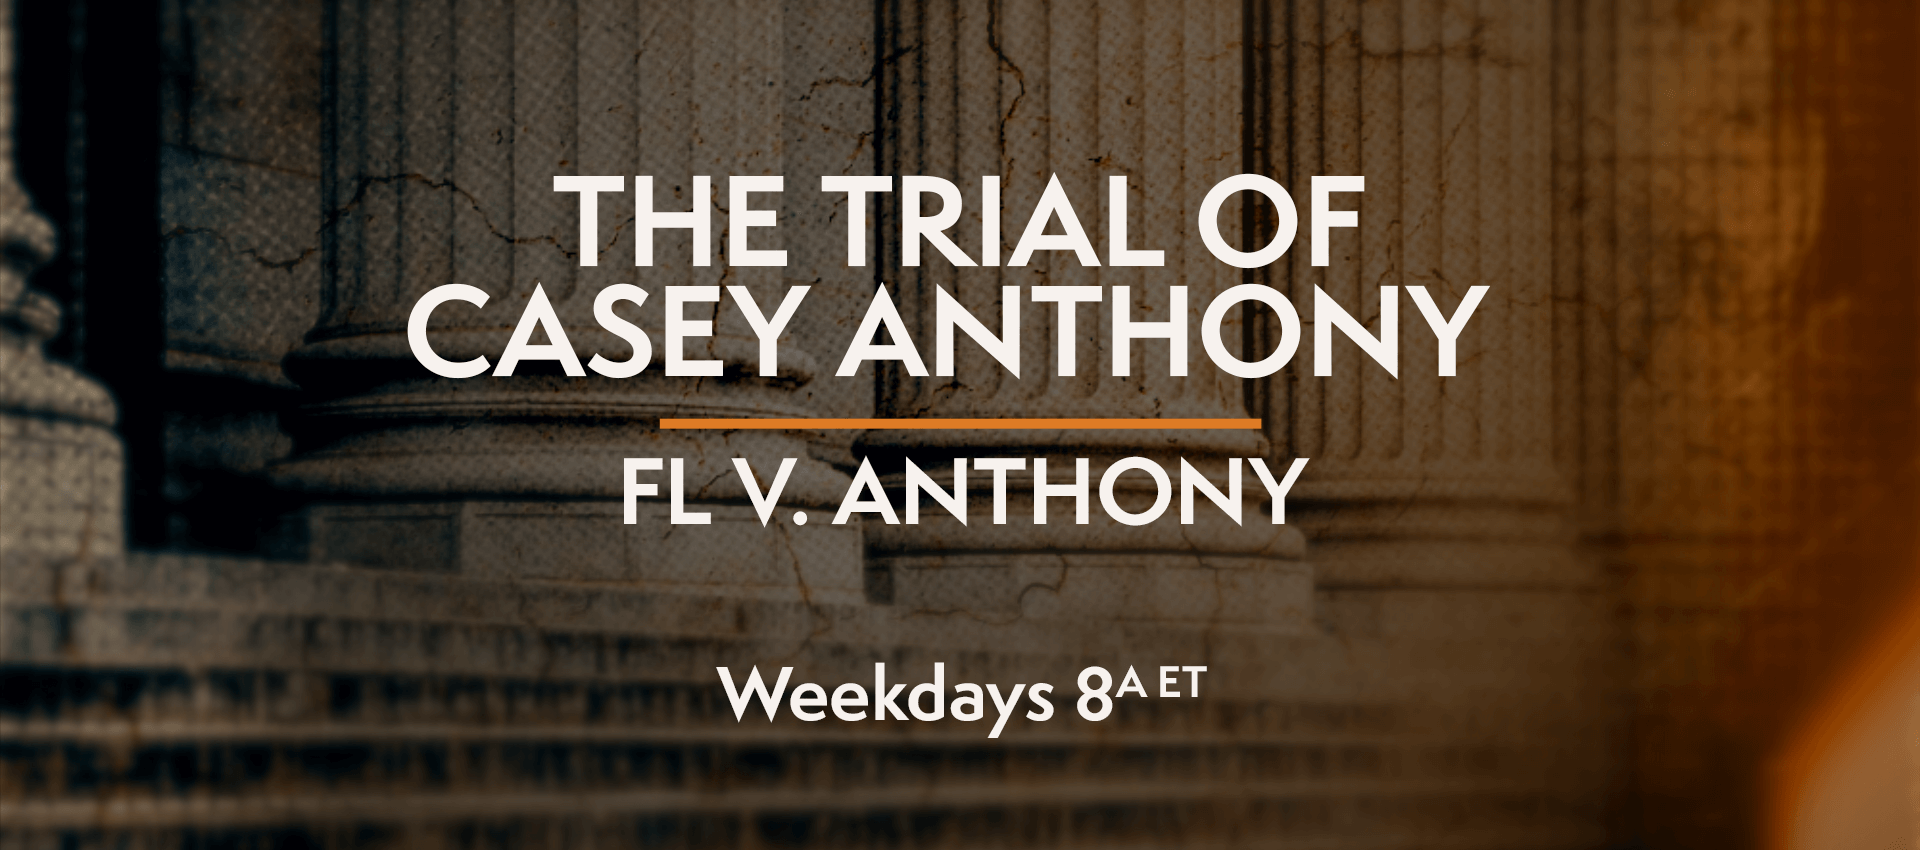 Casey Anthony Legendary Trials Graphic